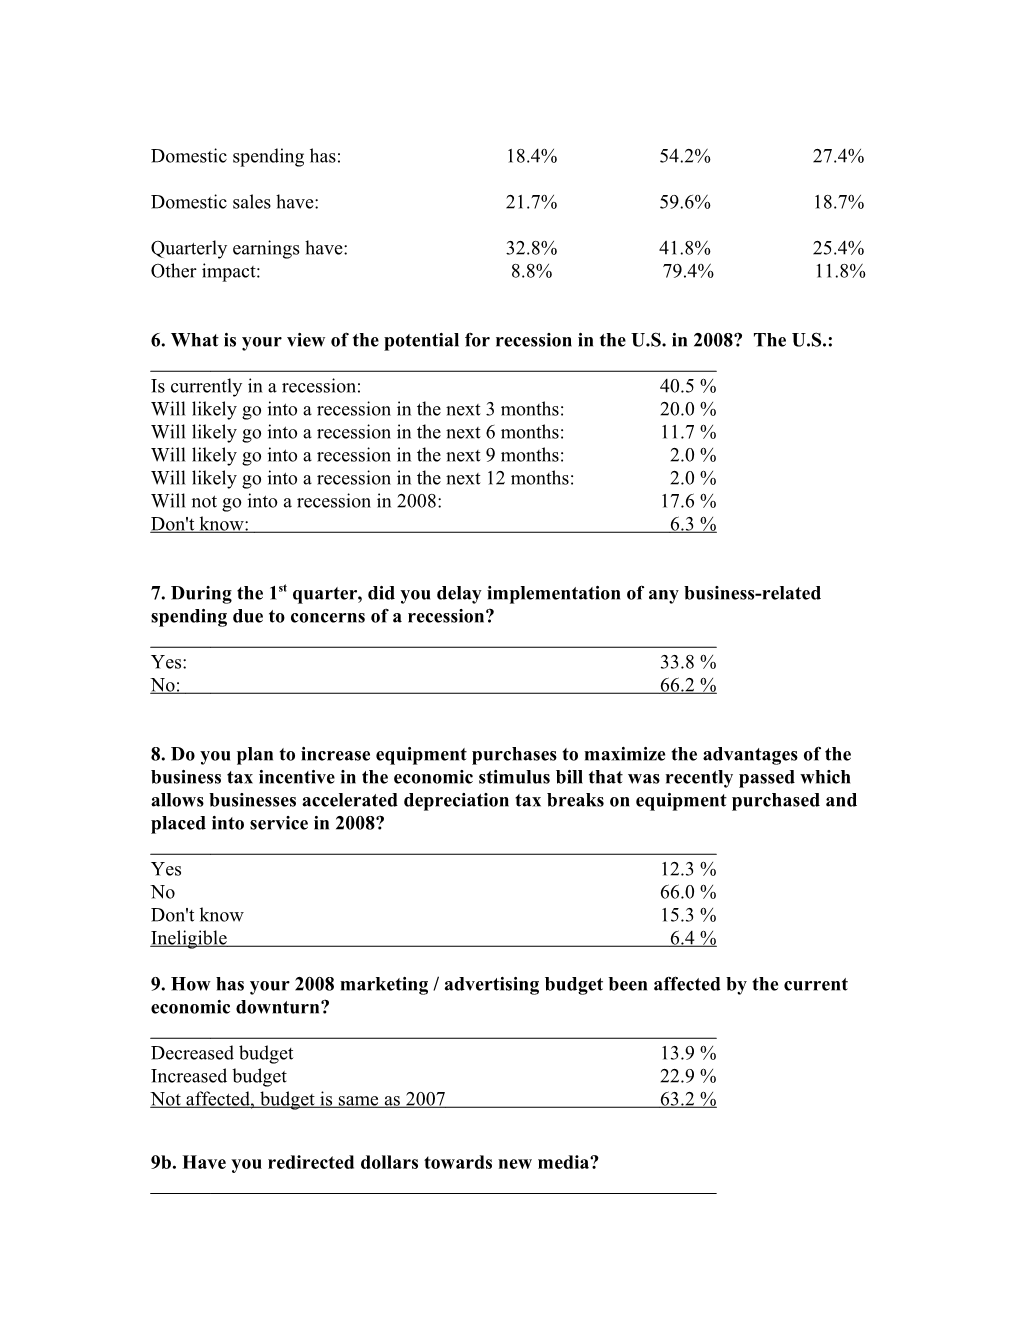 CFO Outlook Survey Detailed Summary Report 1St Quarter 2008